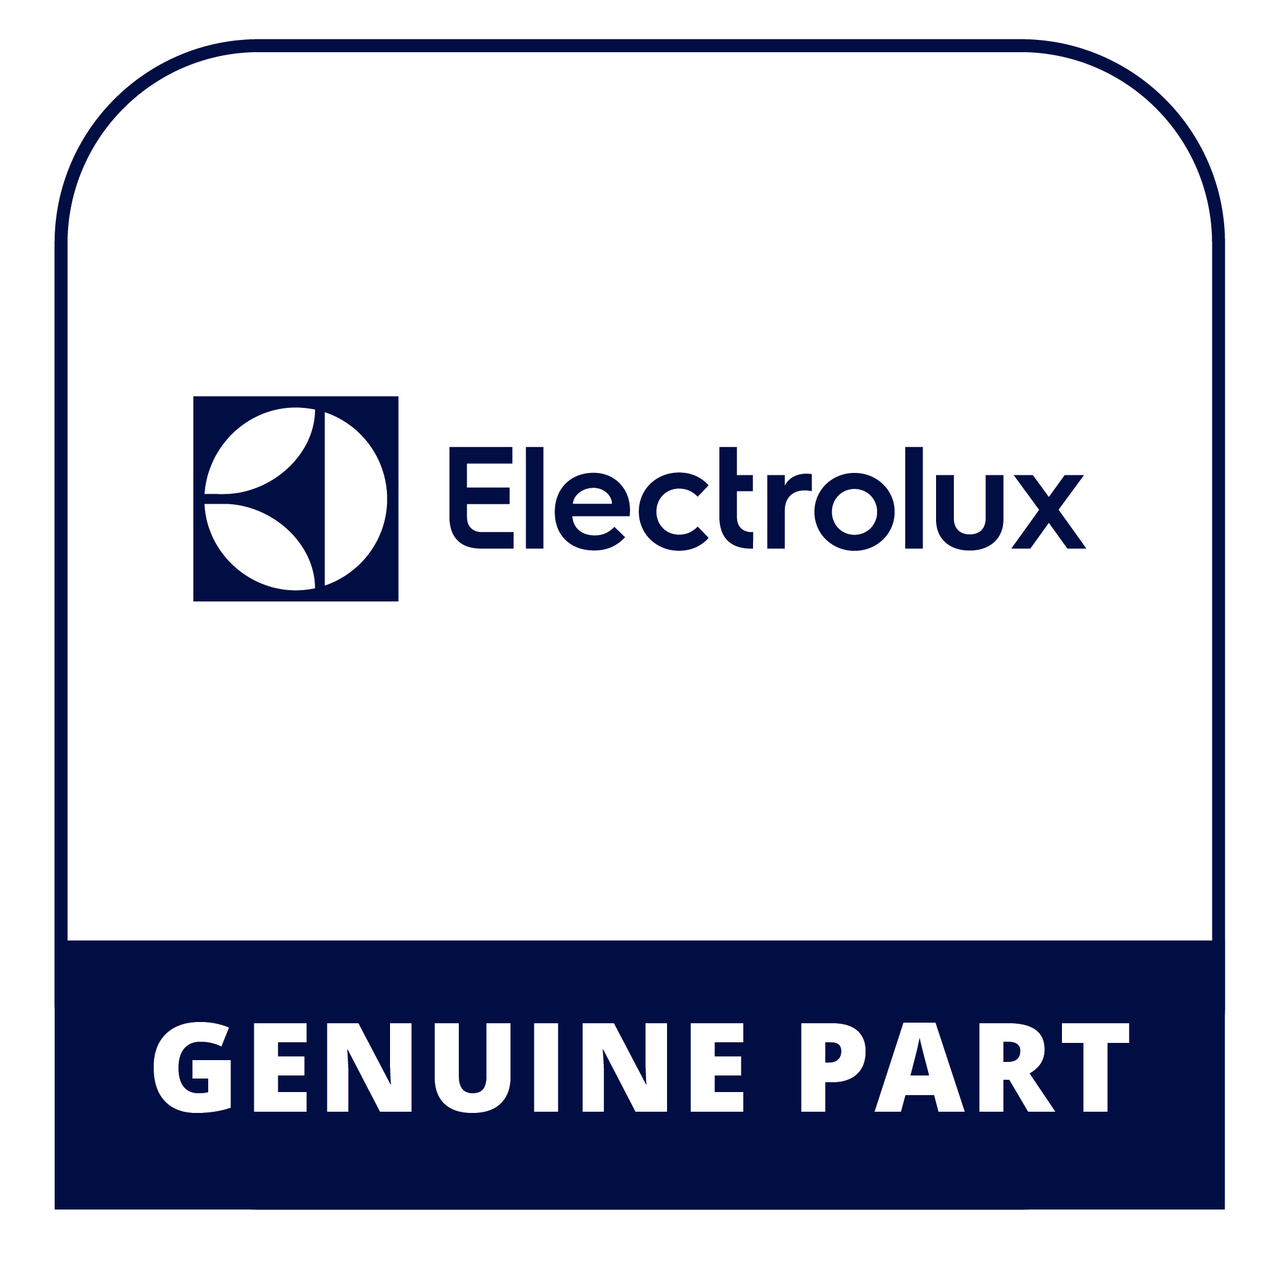 Frigidaire - Electrolux 242157501 Cover - Genuine Electrolux Part